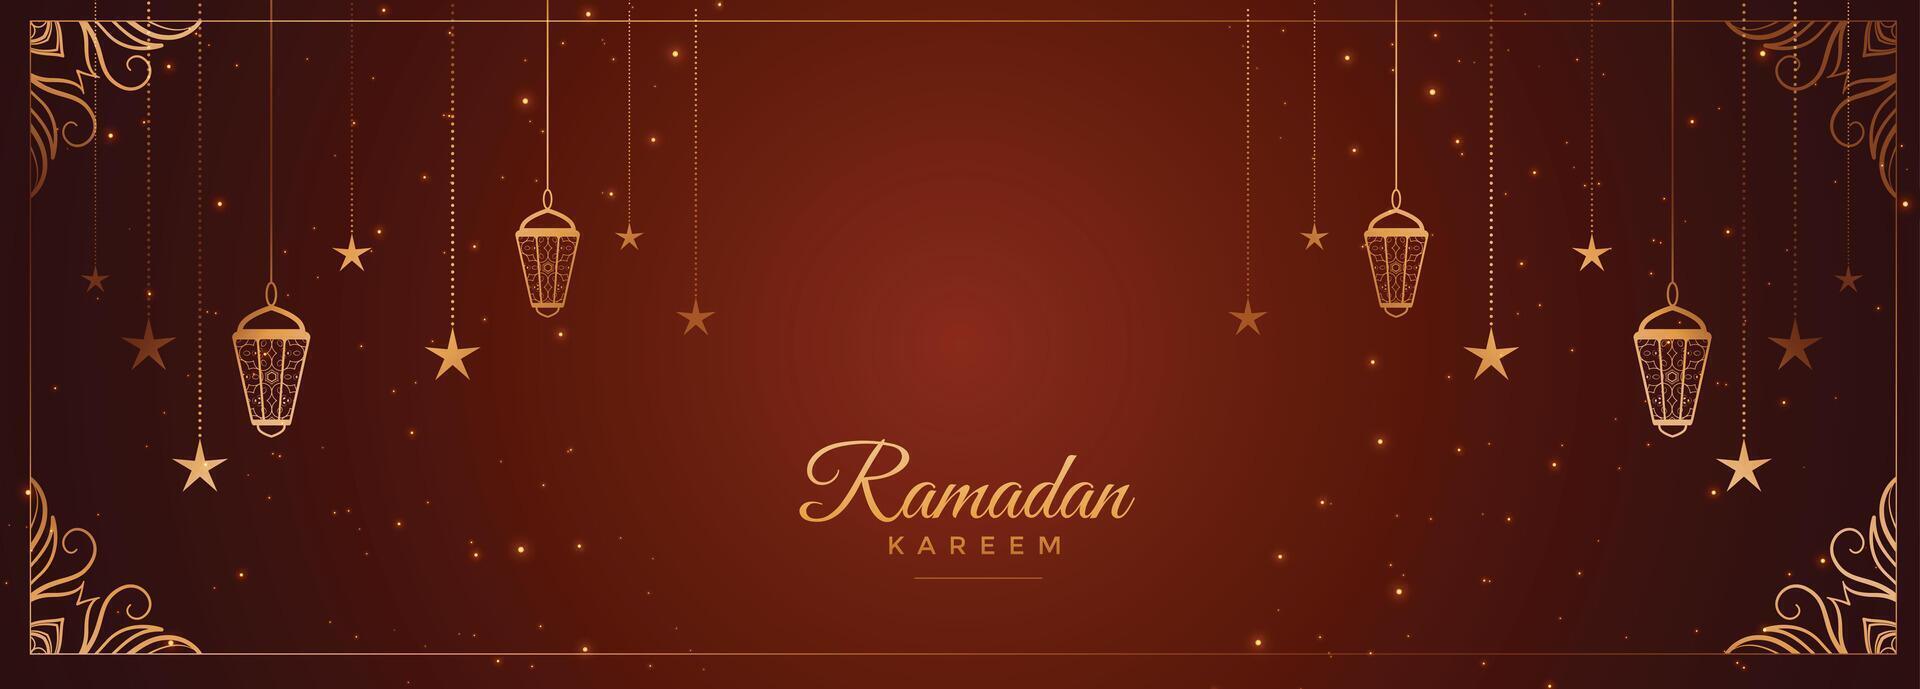 ramadan kareem wishes banner with arabic decoration vector